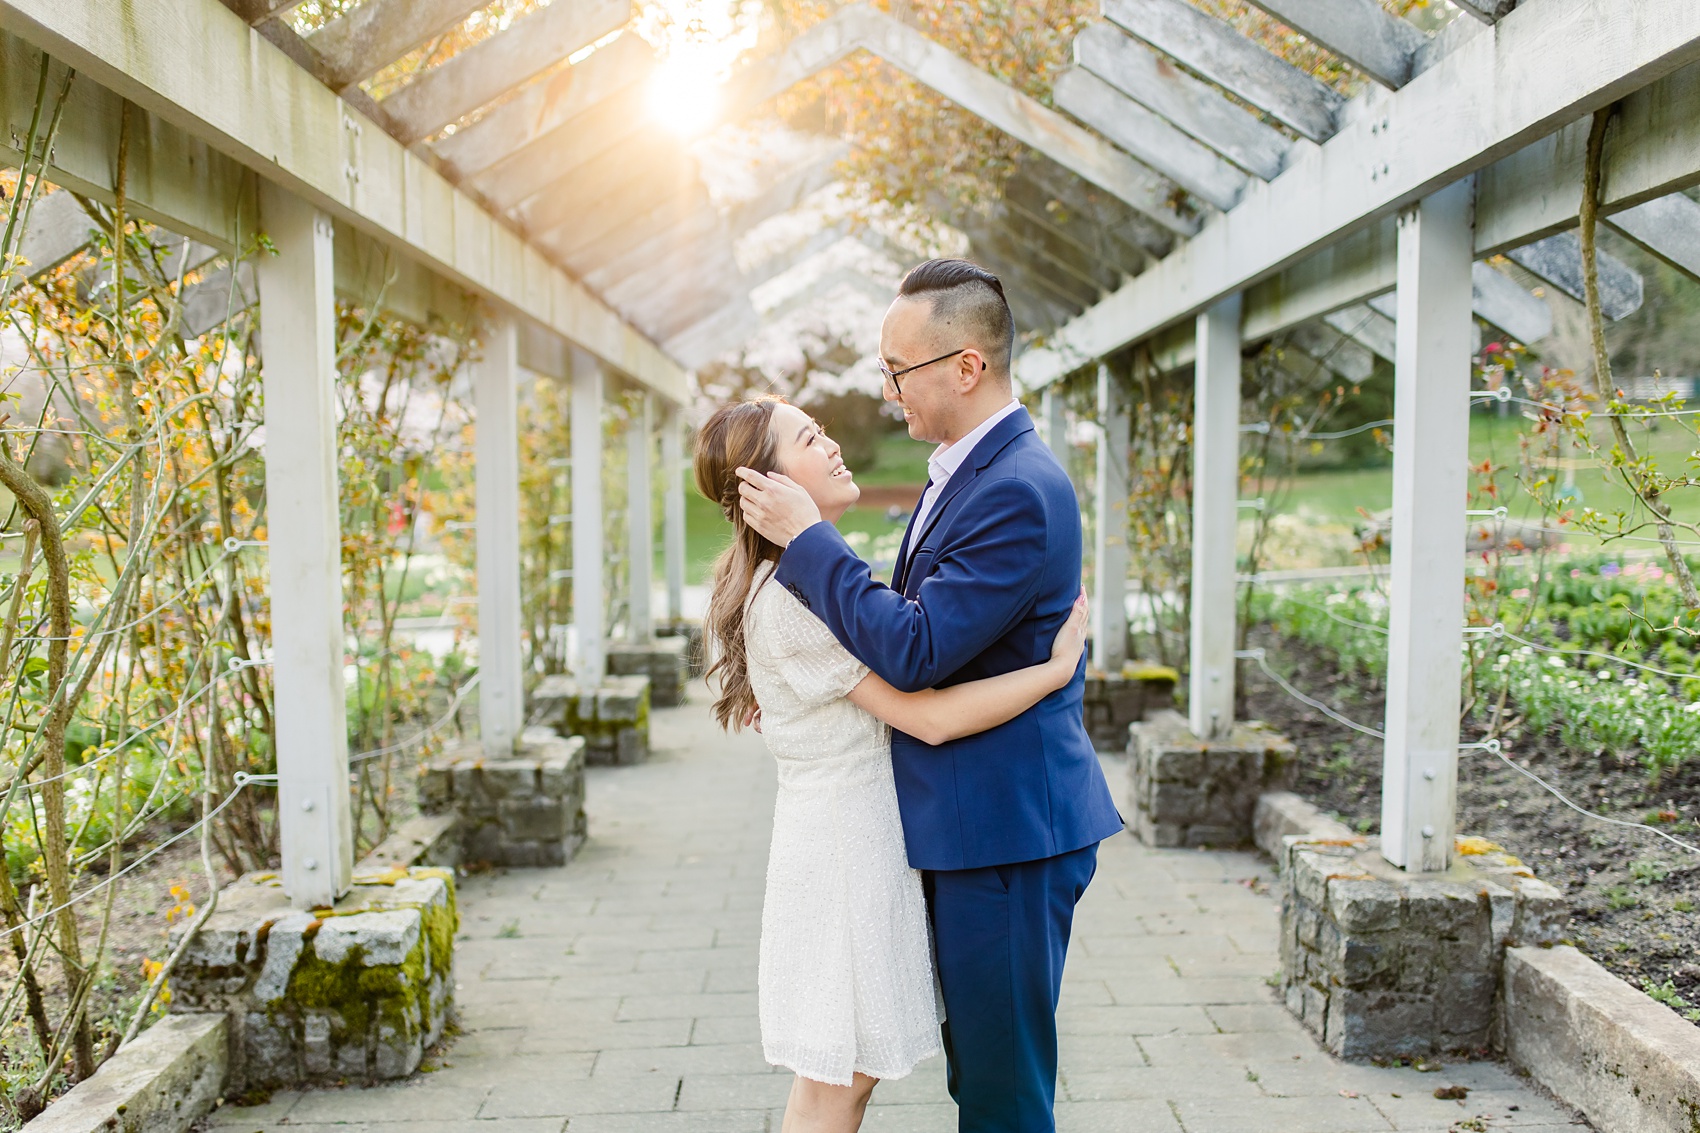 Engagement photo taken at Stanley Park Rose Garden, backlit by golden light from the sun 